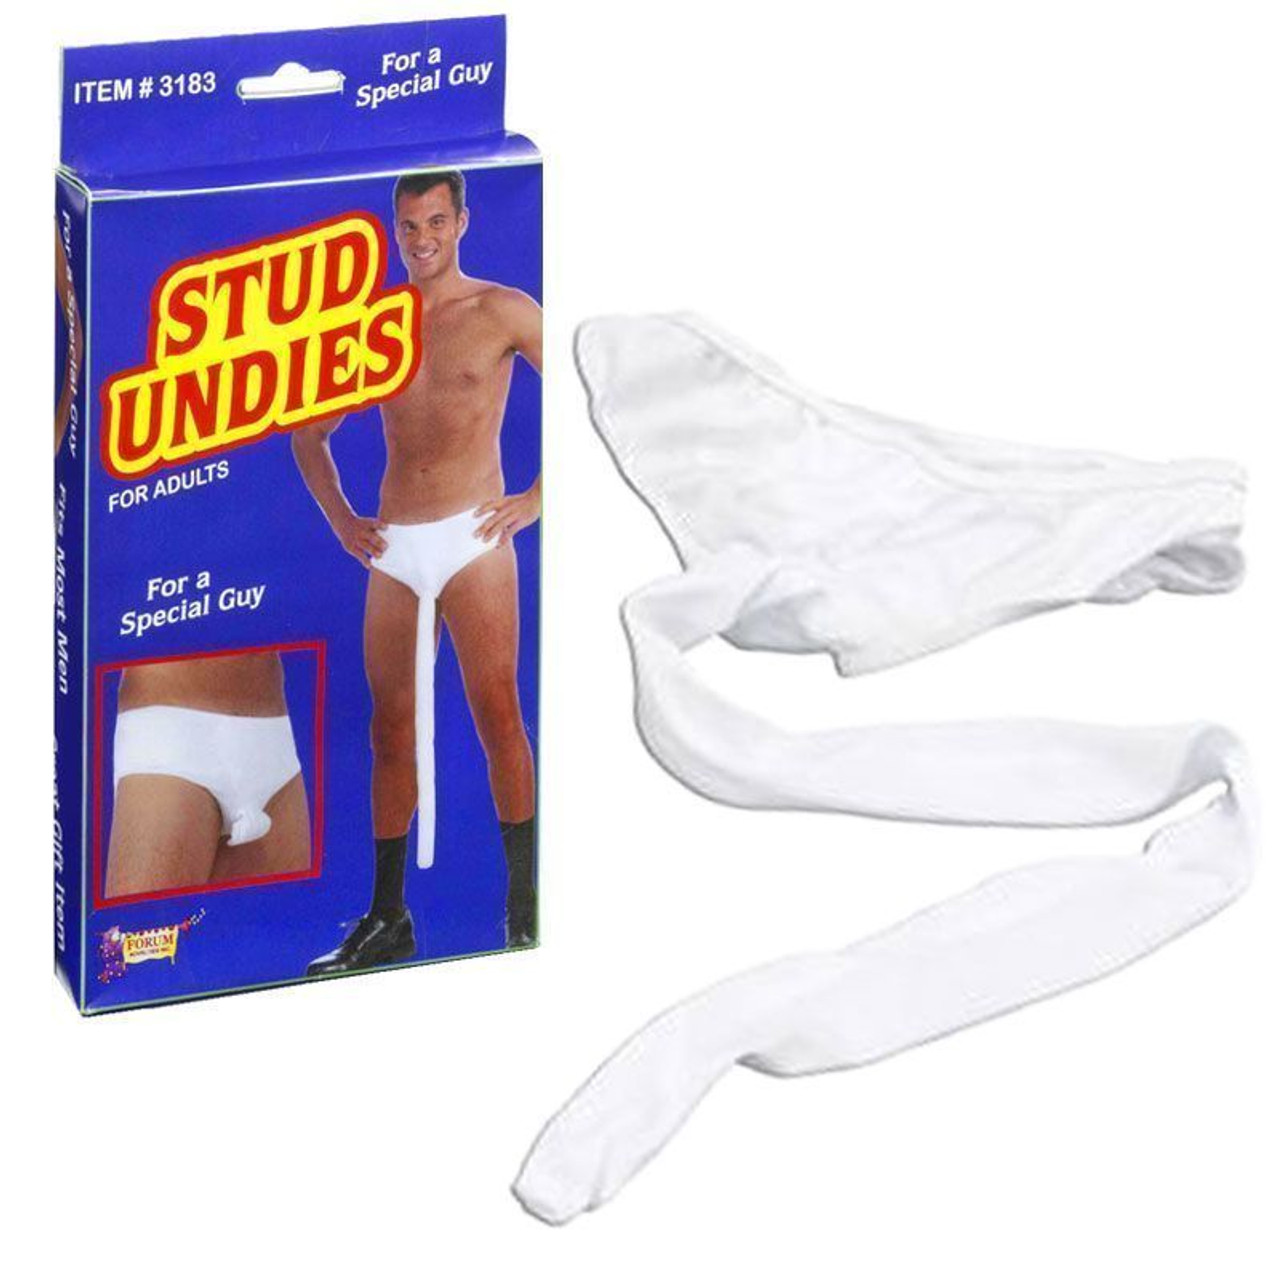 Adult Stud Undies Underwear Well Hung Party Mens Gag Gift Joke Costume  Accessory - www.